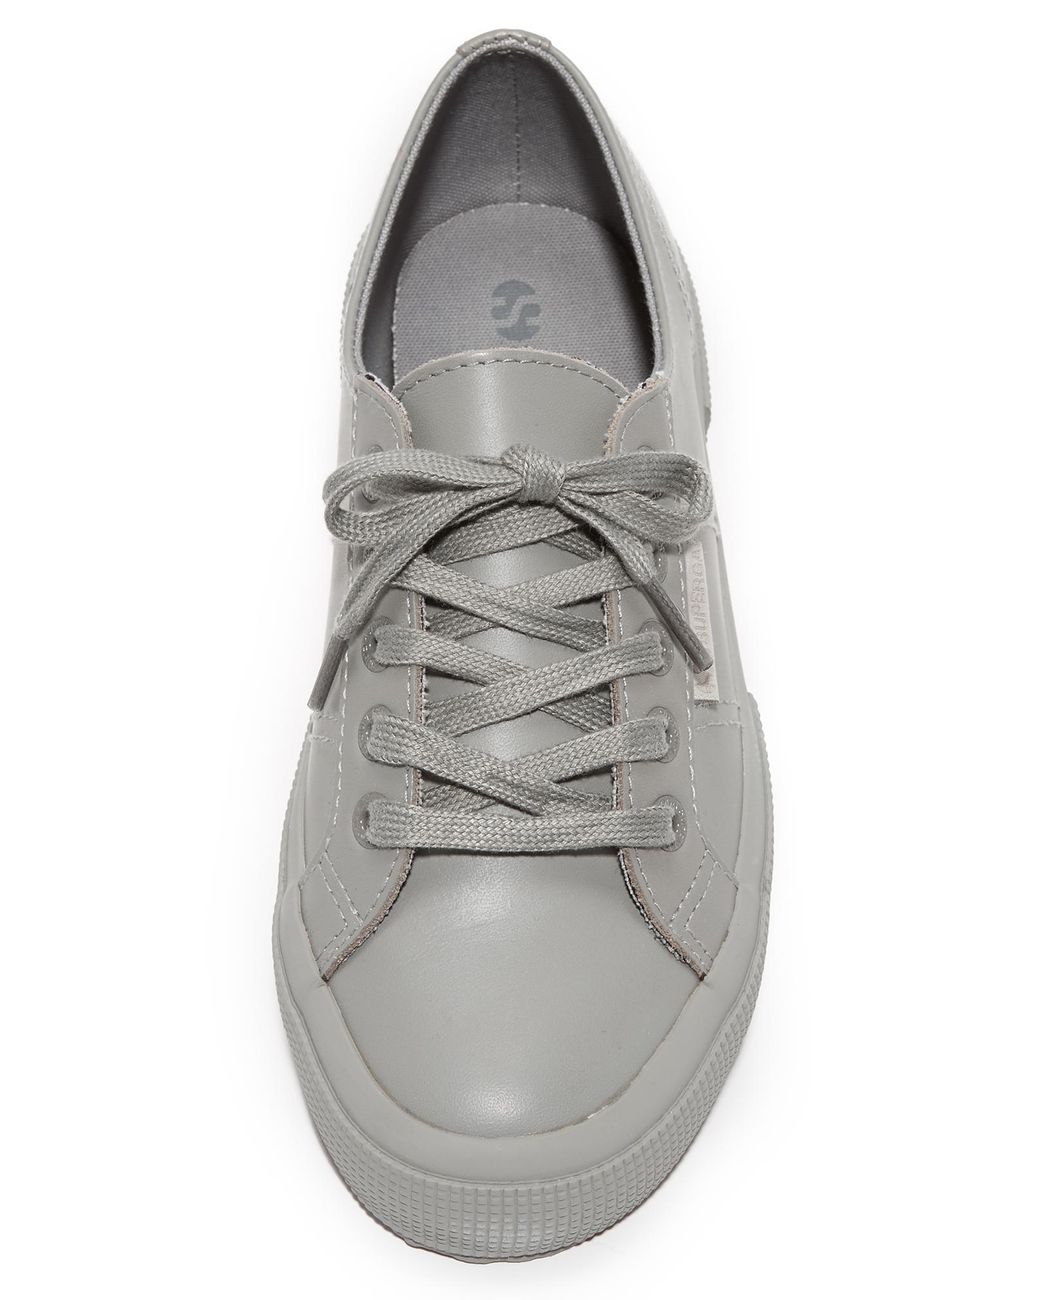 Superga Leather 2750 Fglu Sneakers in Grey | Lyst Canada